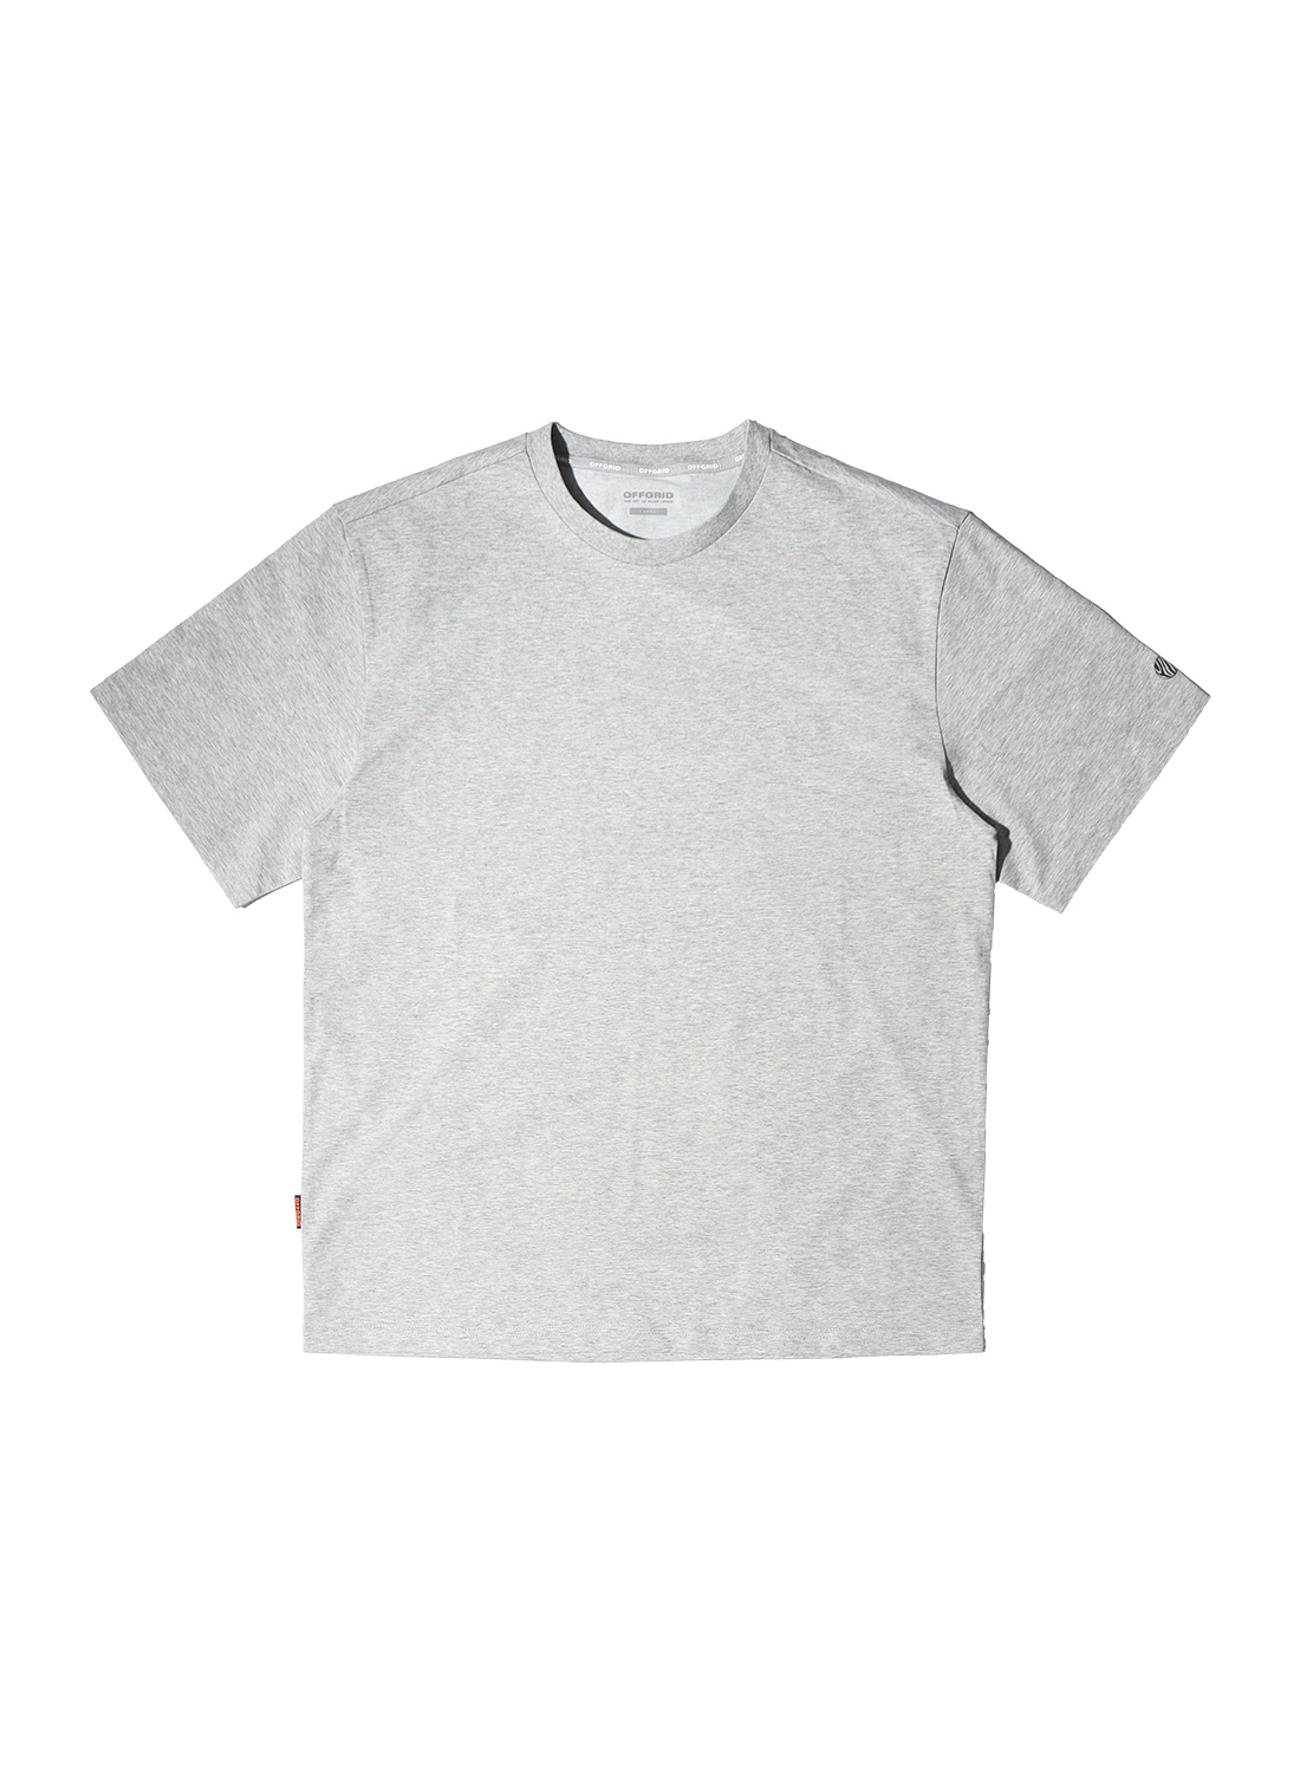 OHC 마운틴 피크 그래픽 티셔츠-멜란지그레이